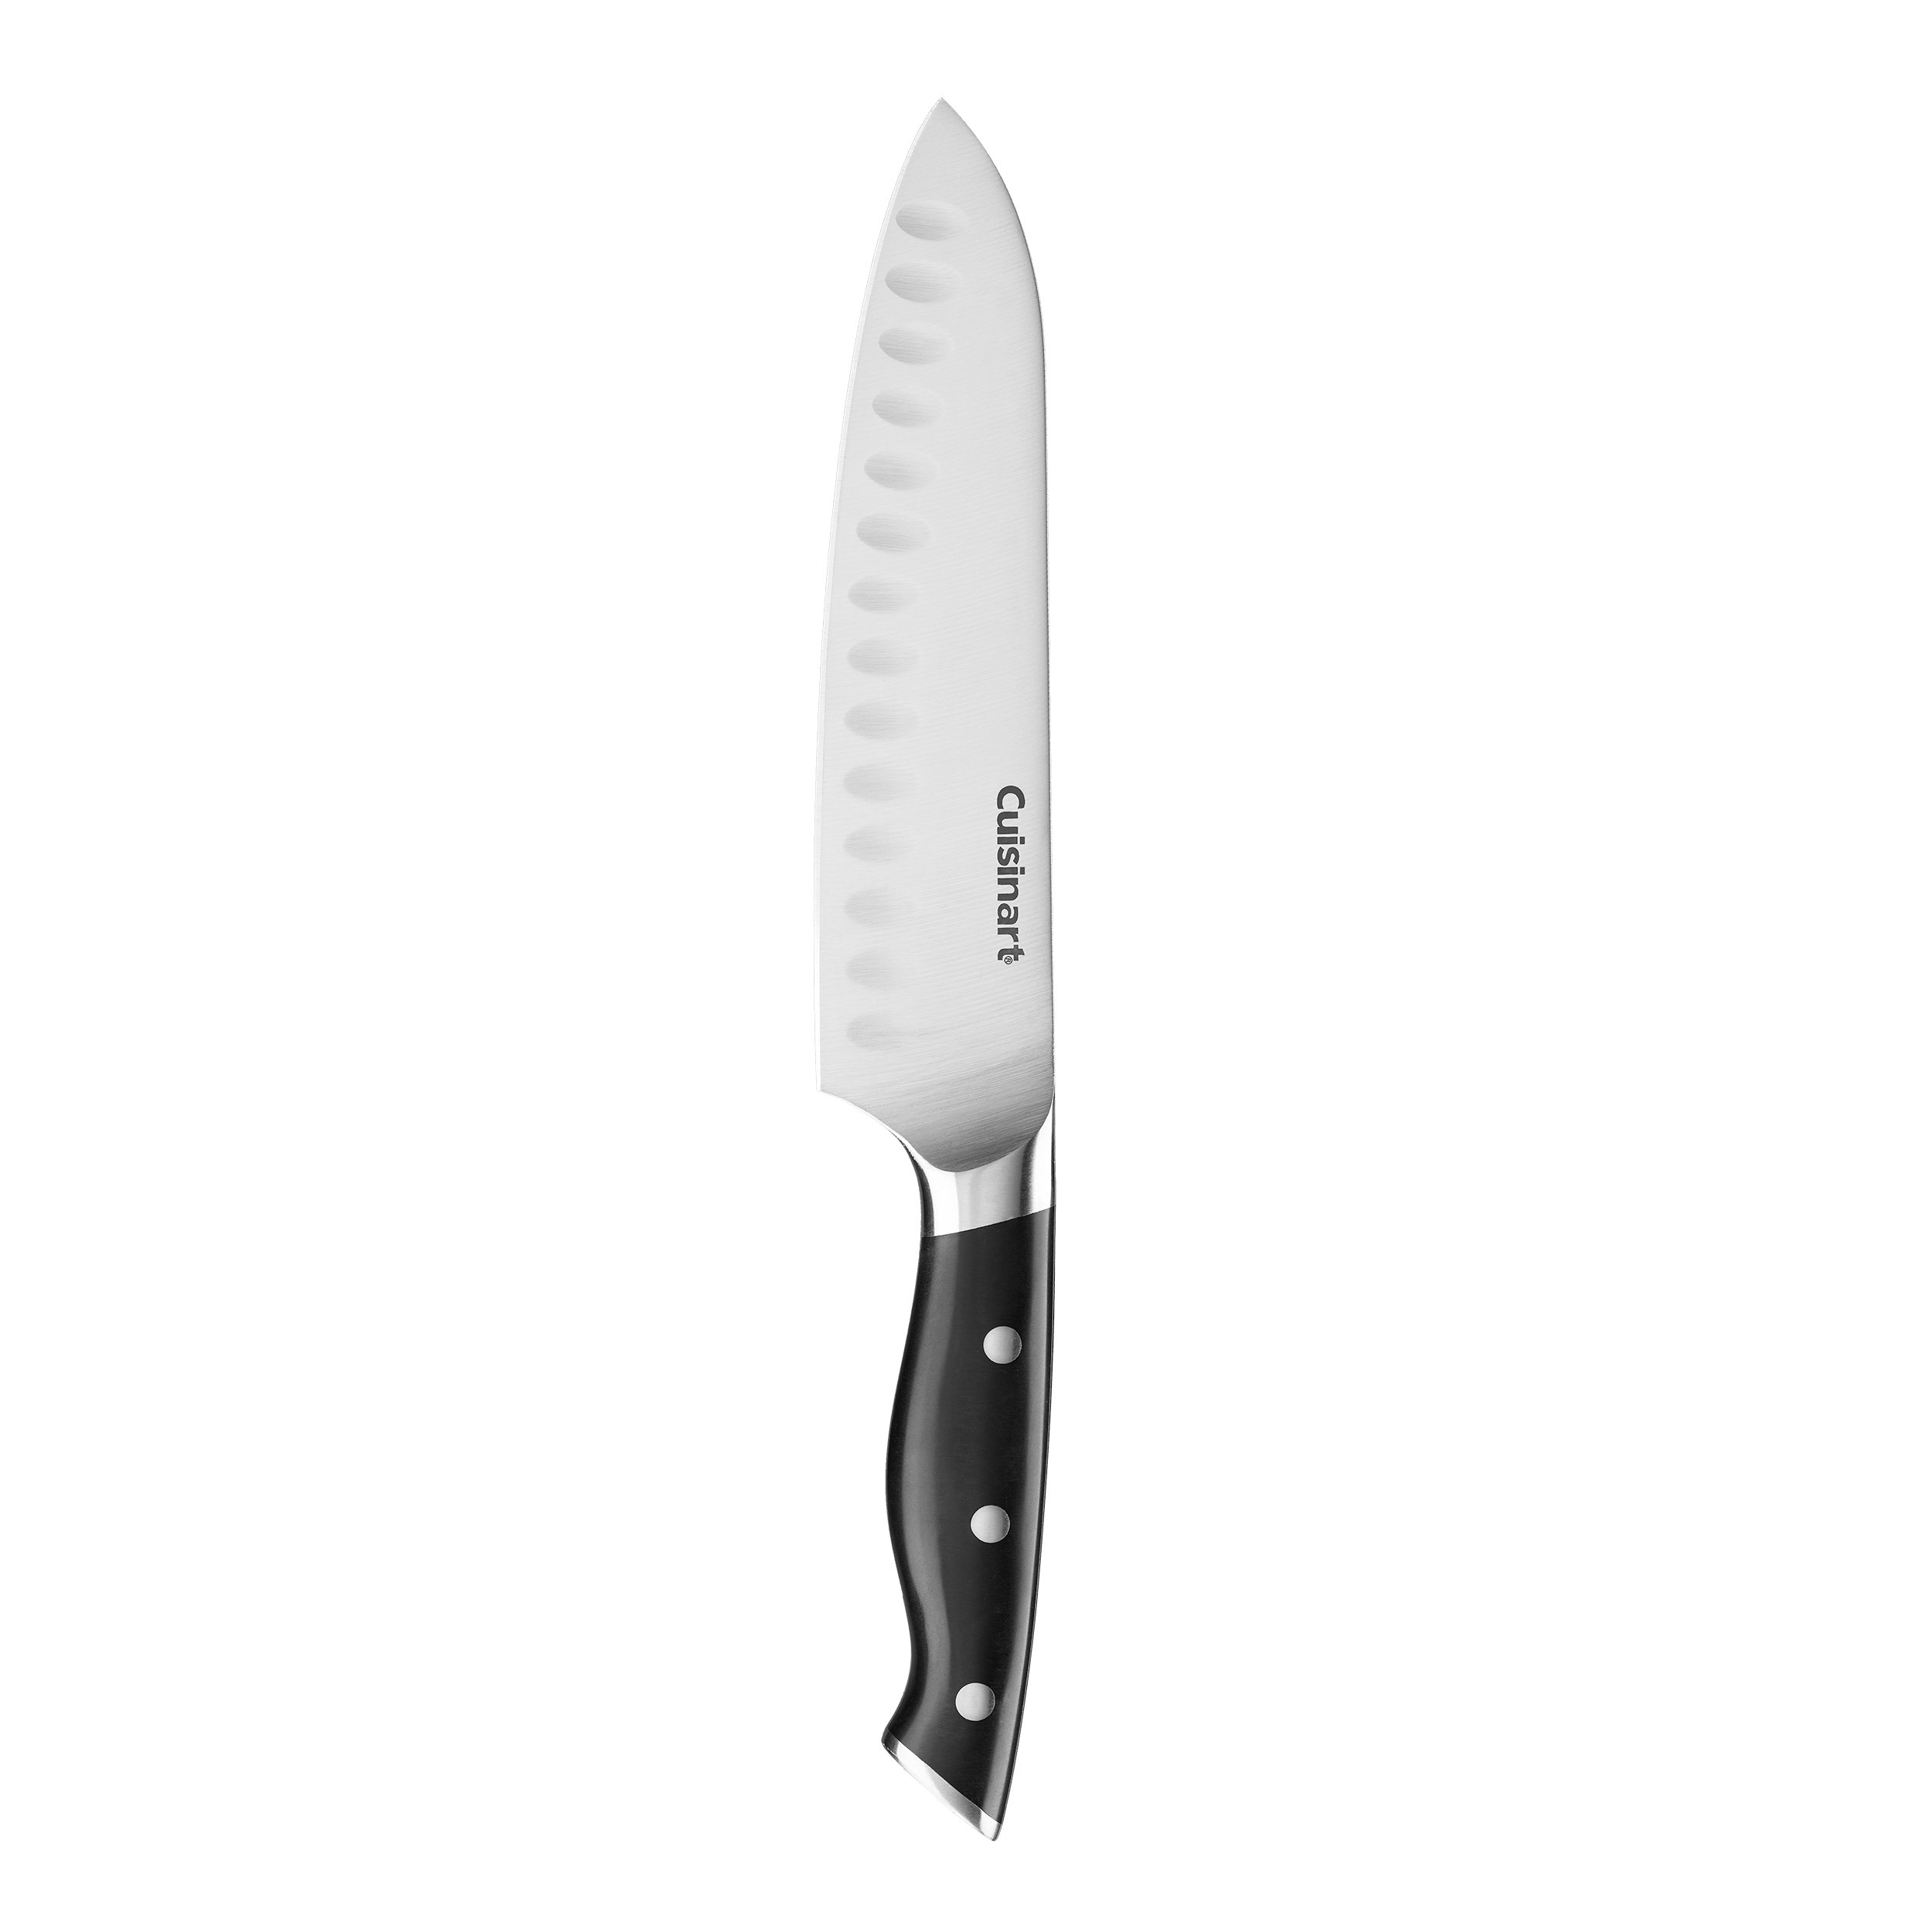 Cuisinart Triple Rivet 3.5 Paring Knife - SANE - Sewing and Housewares